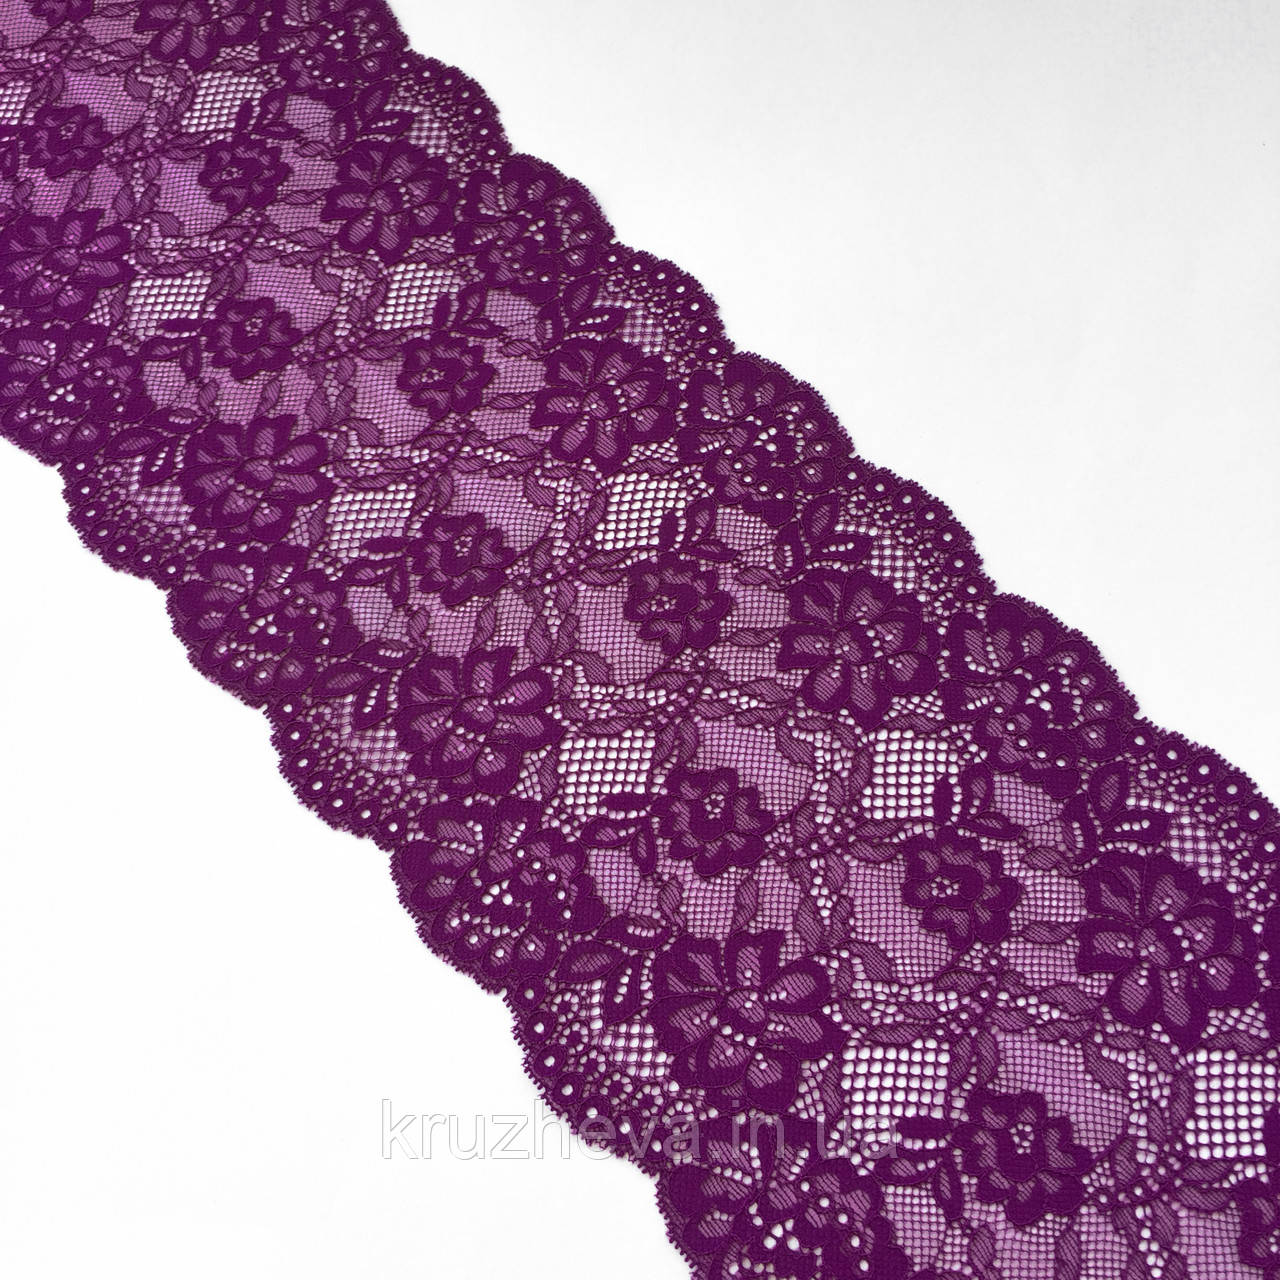 Еластичне (стрейчевое) мереживо фіолетового кольору (пурпурове). Ширина 17,5 см